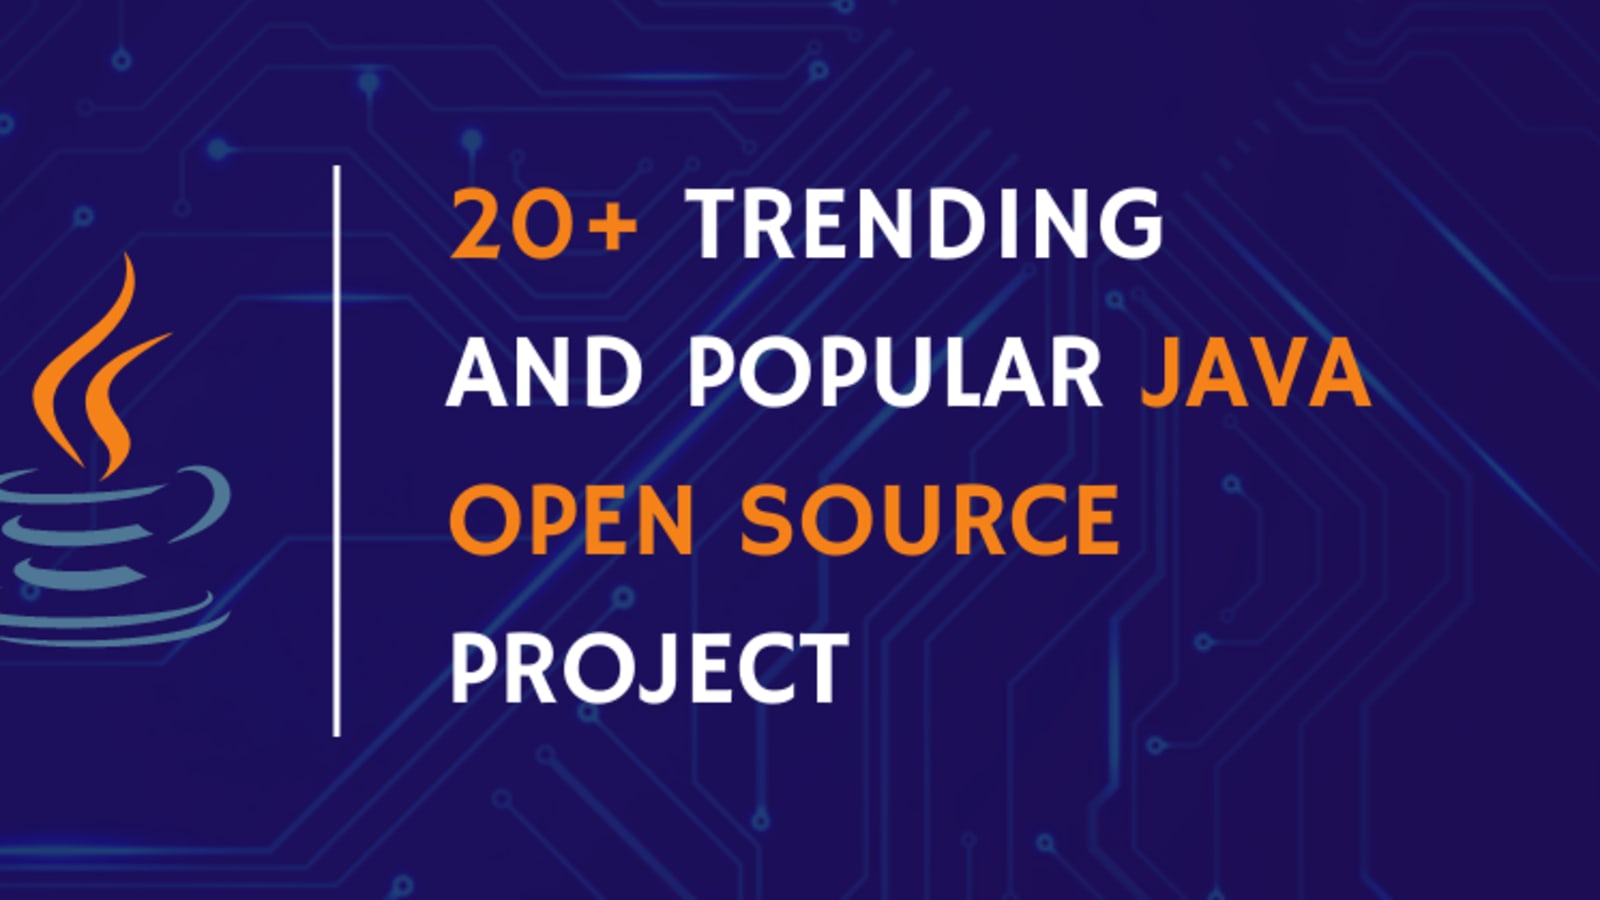 20+ Trending Popular Java Open Source Project - DEV Community